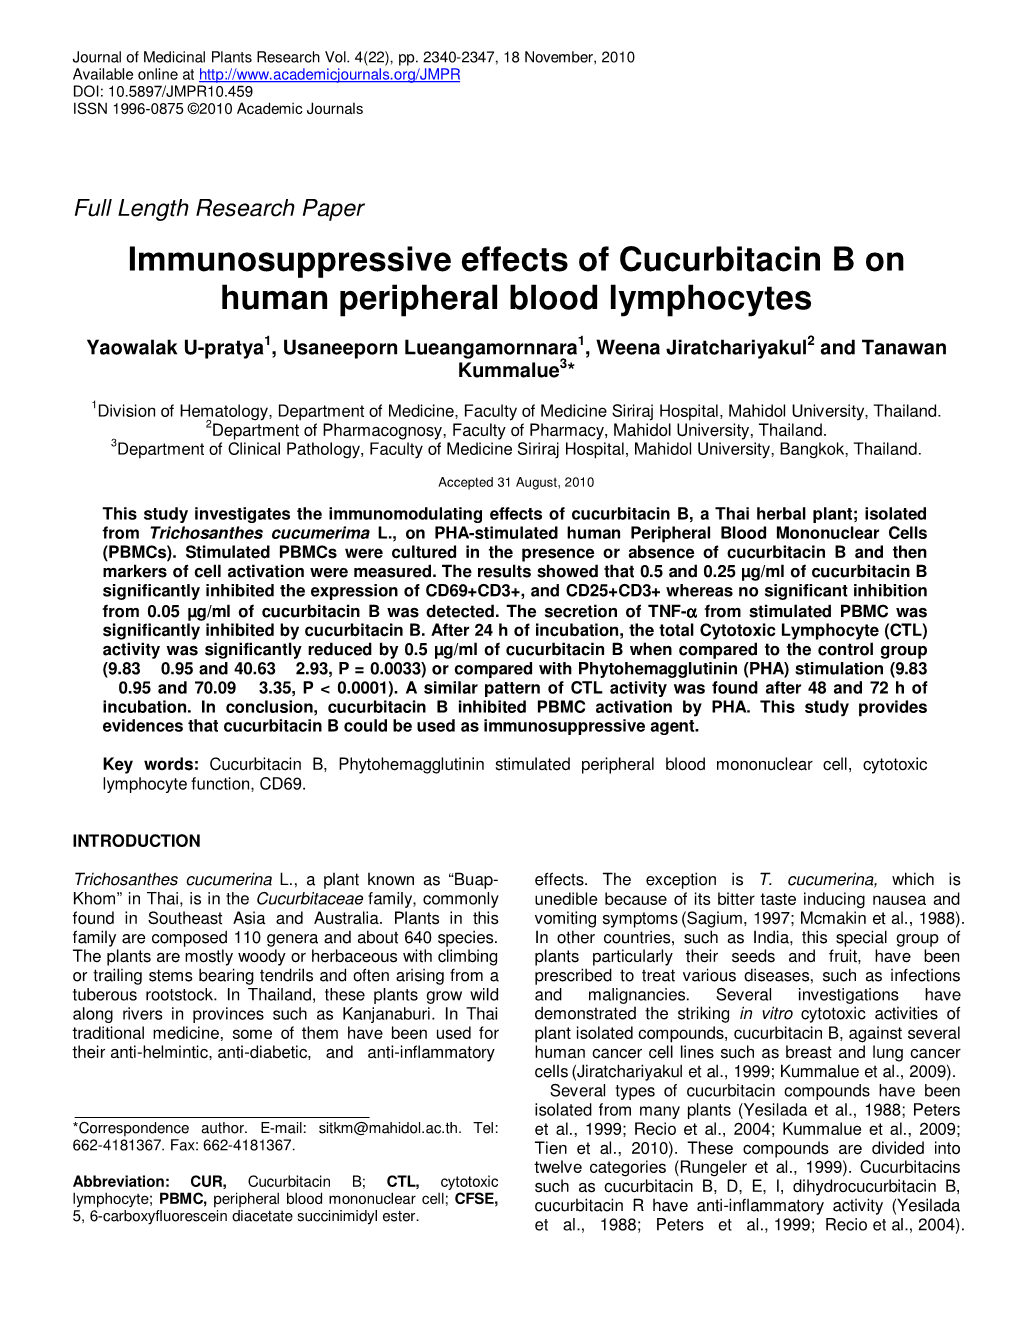 Immunosuppressive Effects of Cucurbitacin B on Human Peripheral Blood Lymphocytes